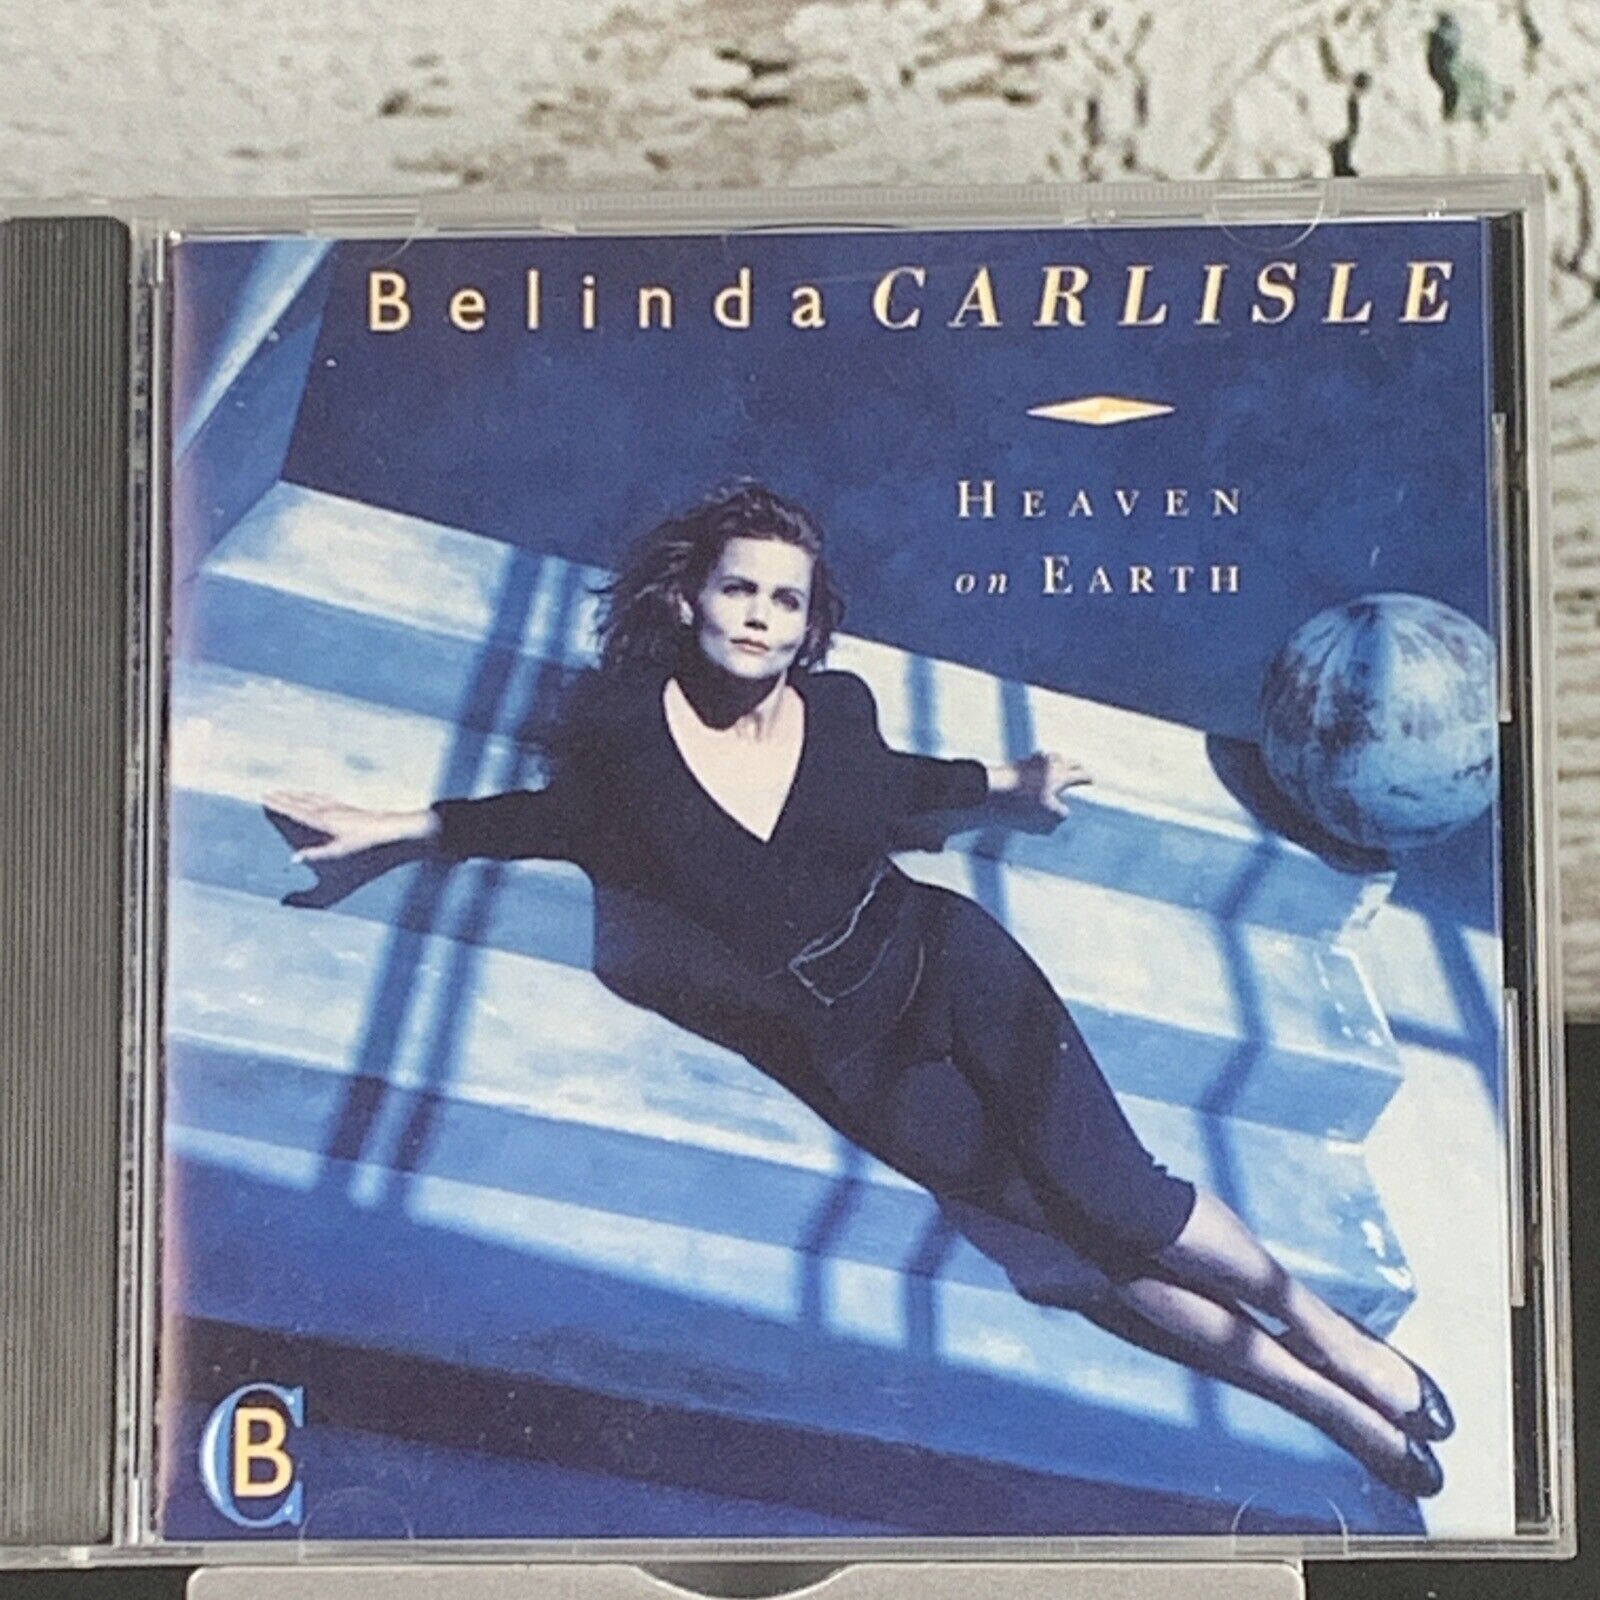 Belinda Carlisle - Heaven on Earth (CD, Oct-1987, MCA)